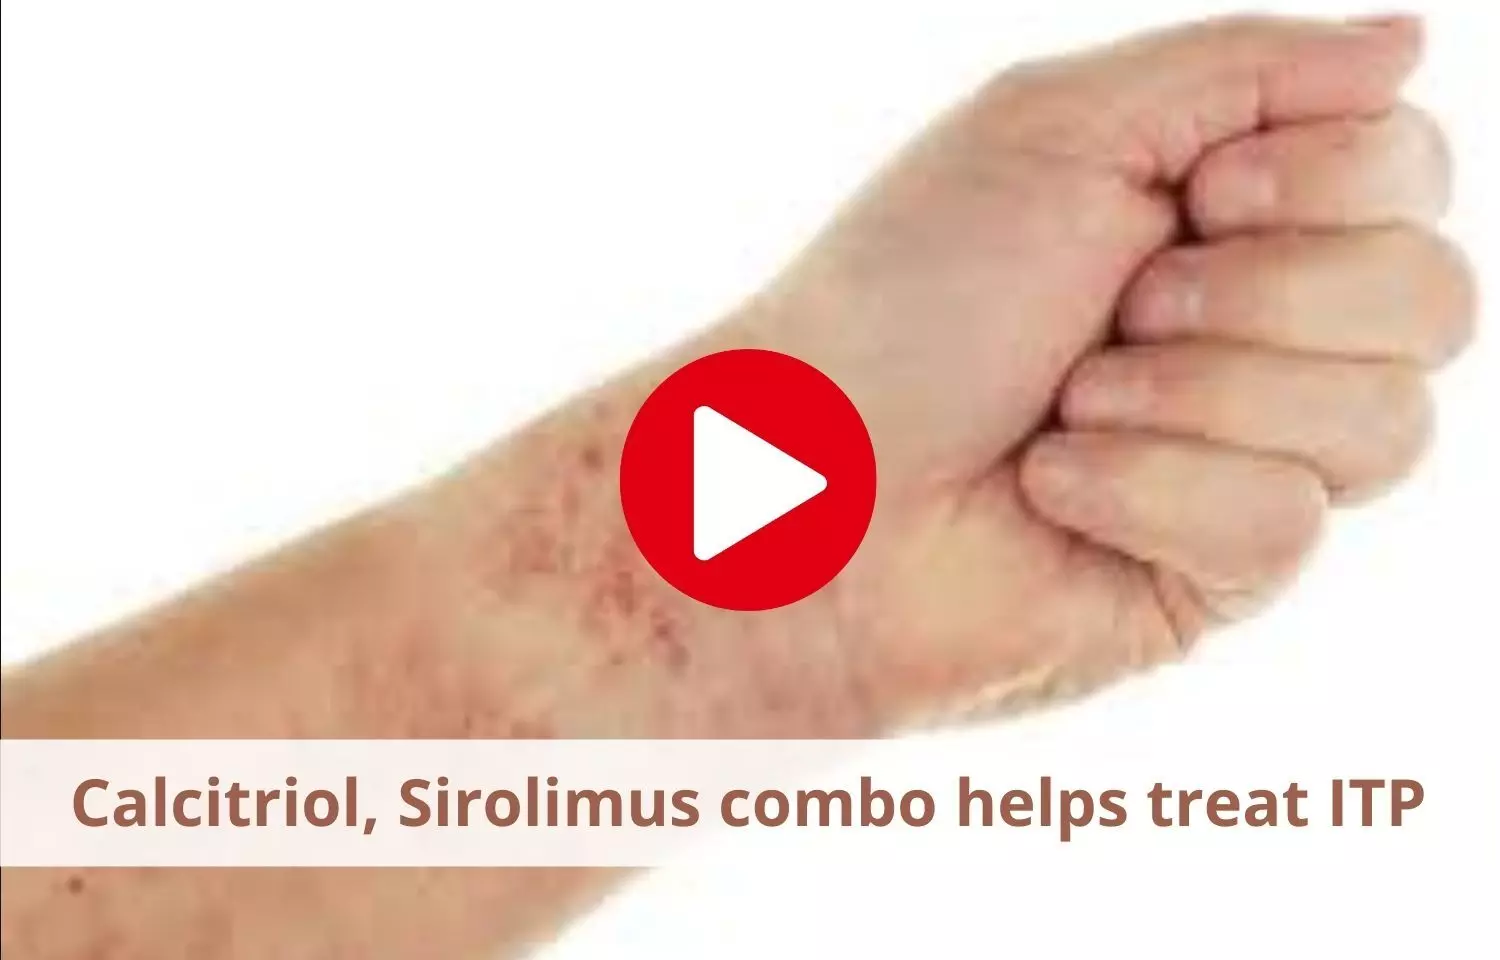 Calcitriol, Sirolimus combination efficacious in treating immune thrombocytopenia